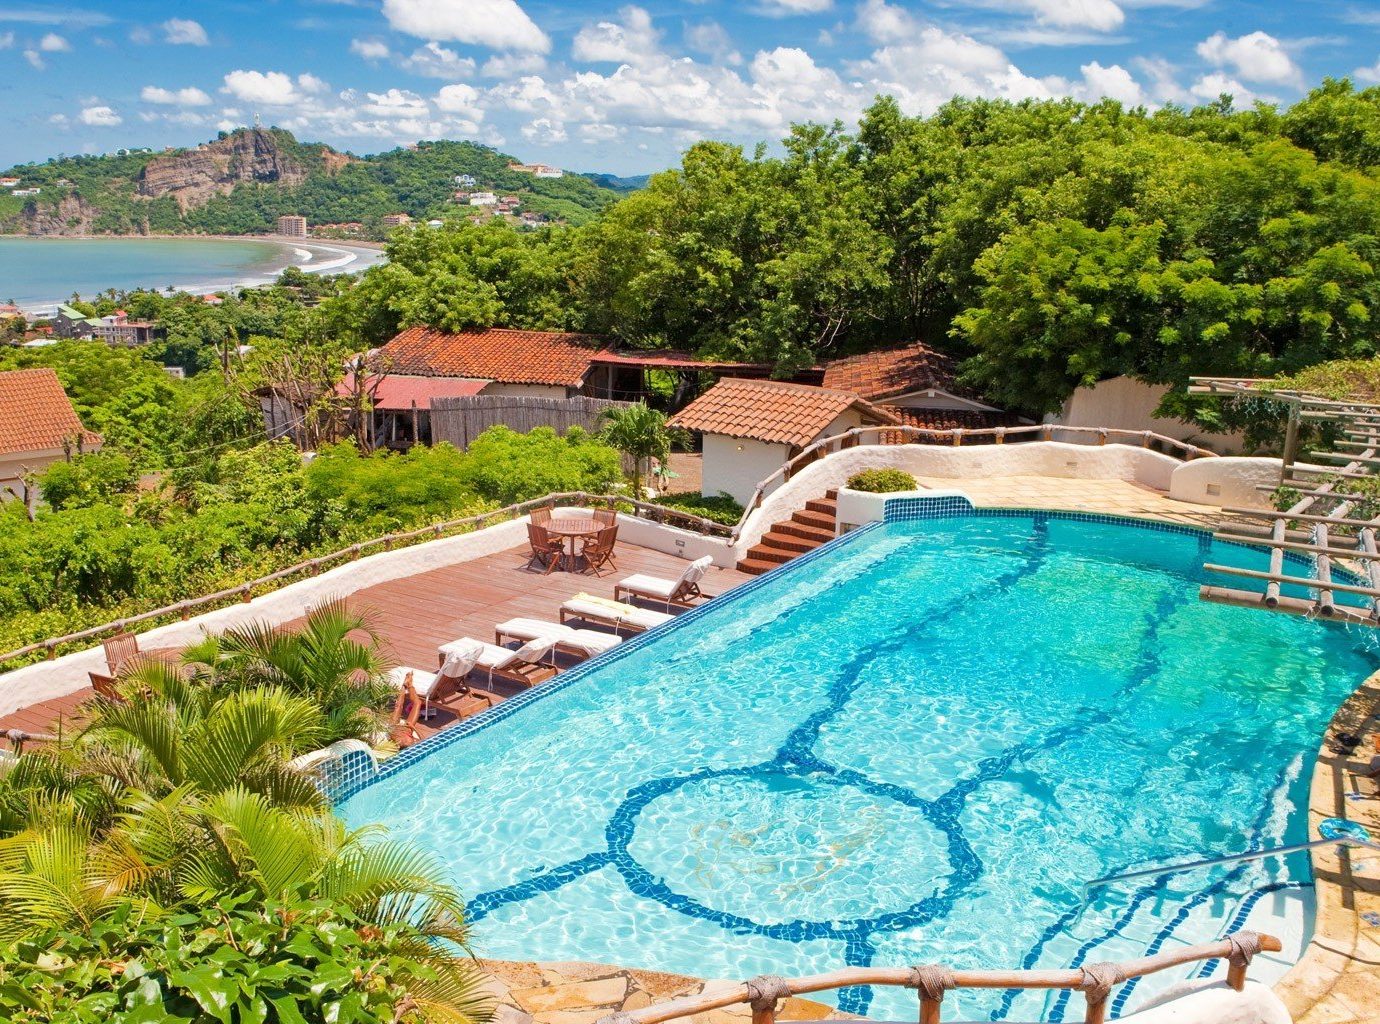 Trip Ideas outdoor swimming pool property leisure Resort estate vacation Villa real estate backyard Garden